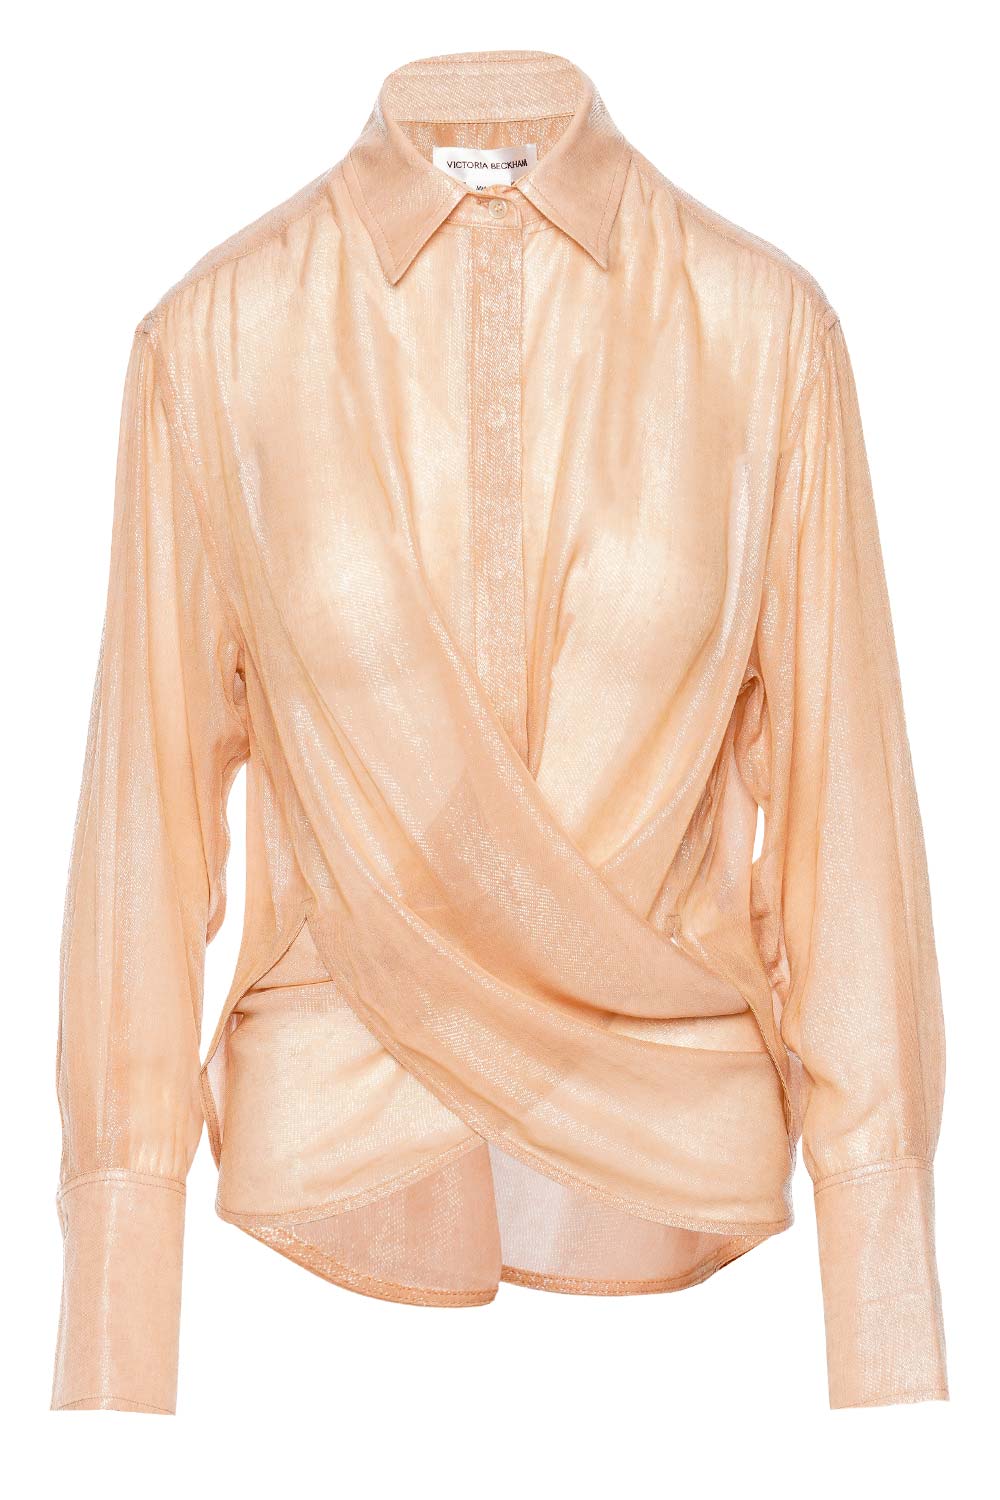 Victoria Beckham Rosewater Lurex Silk Wrap Front Blouse